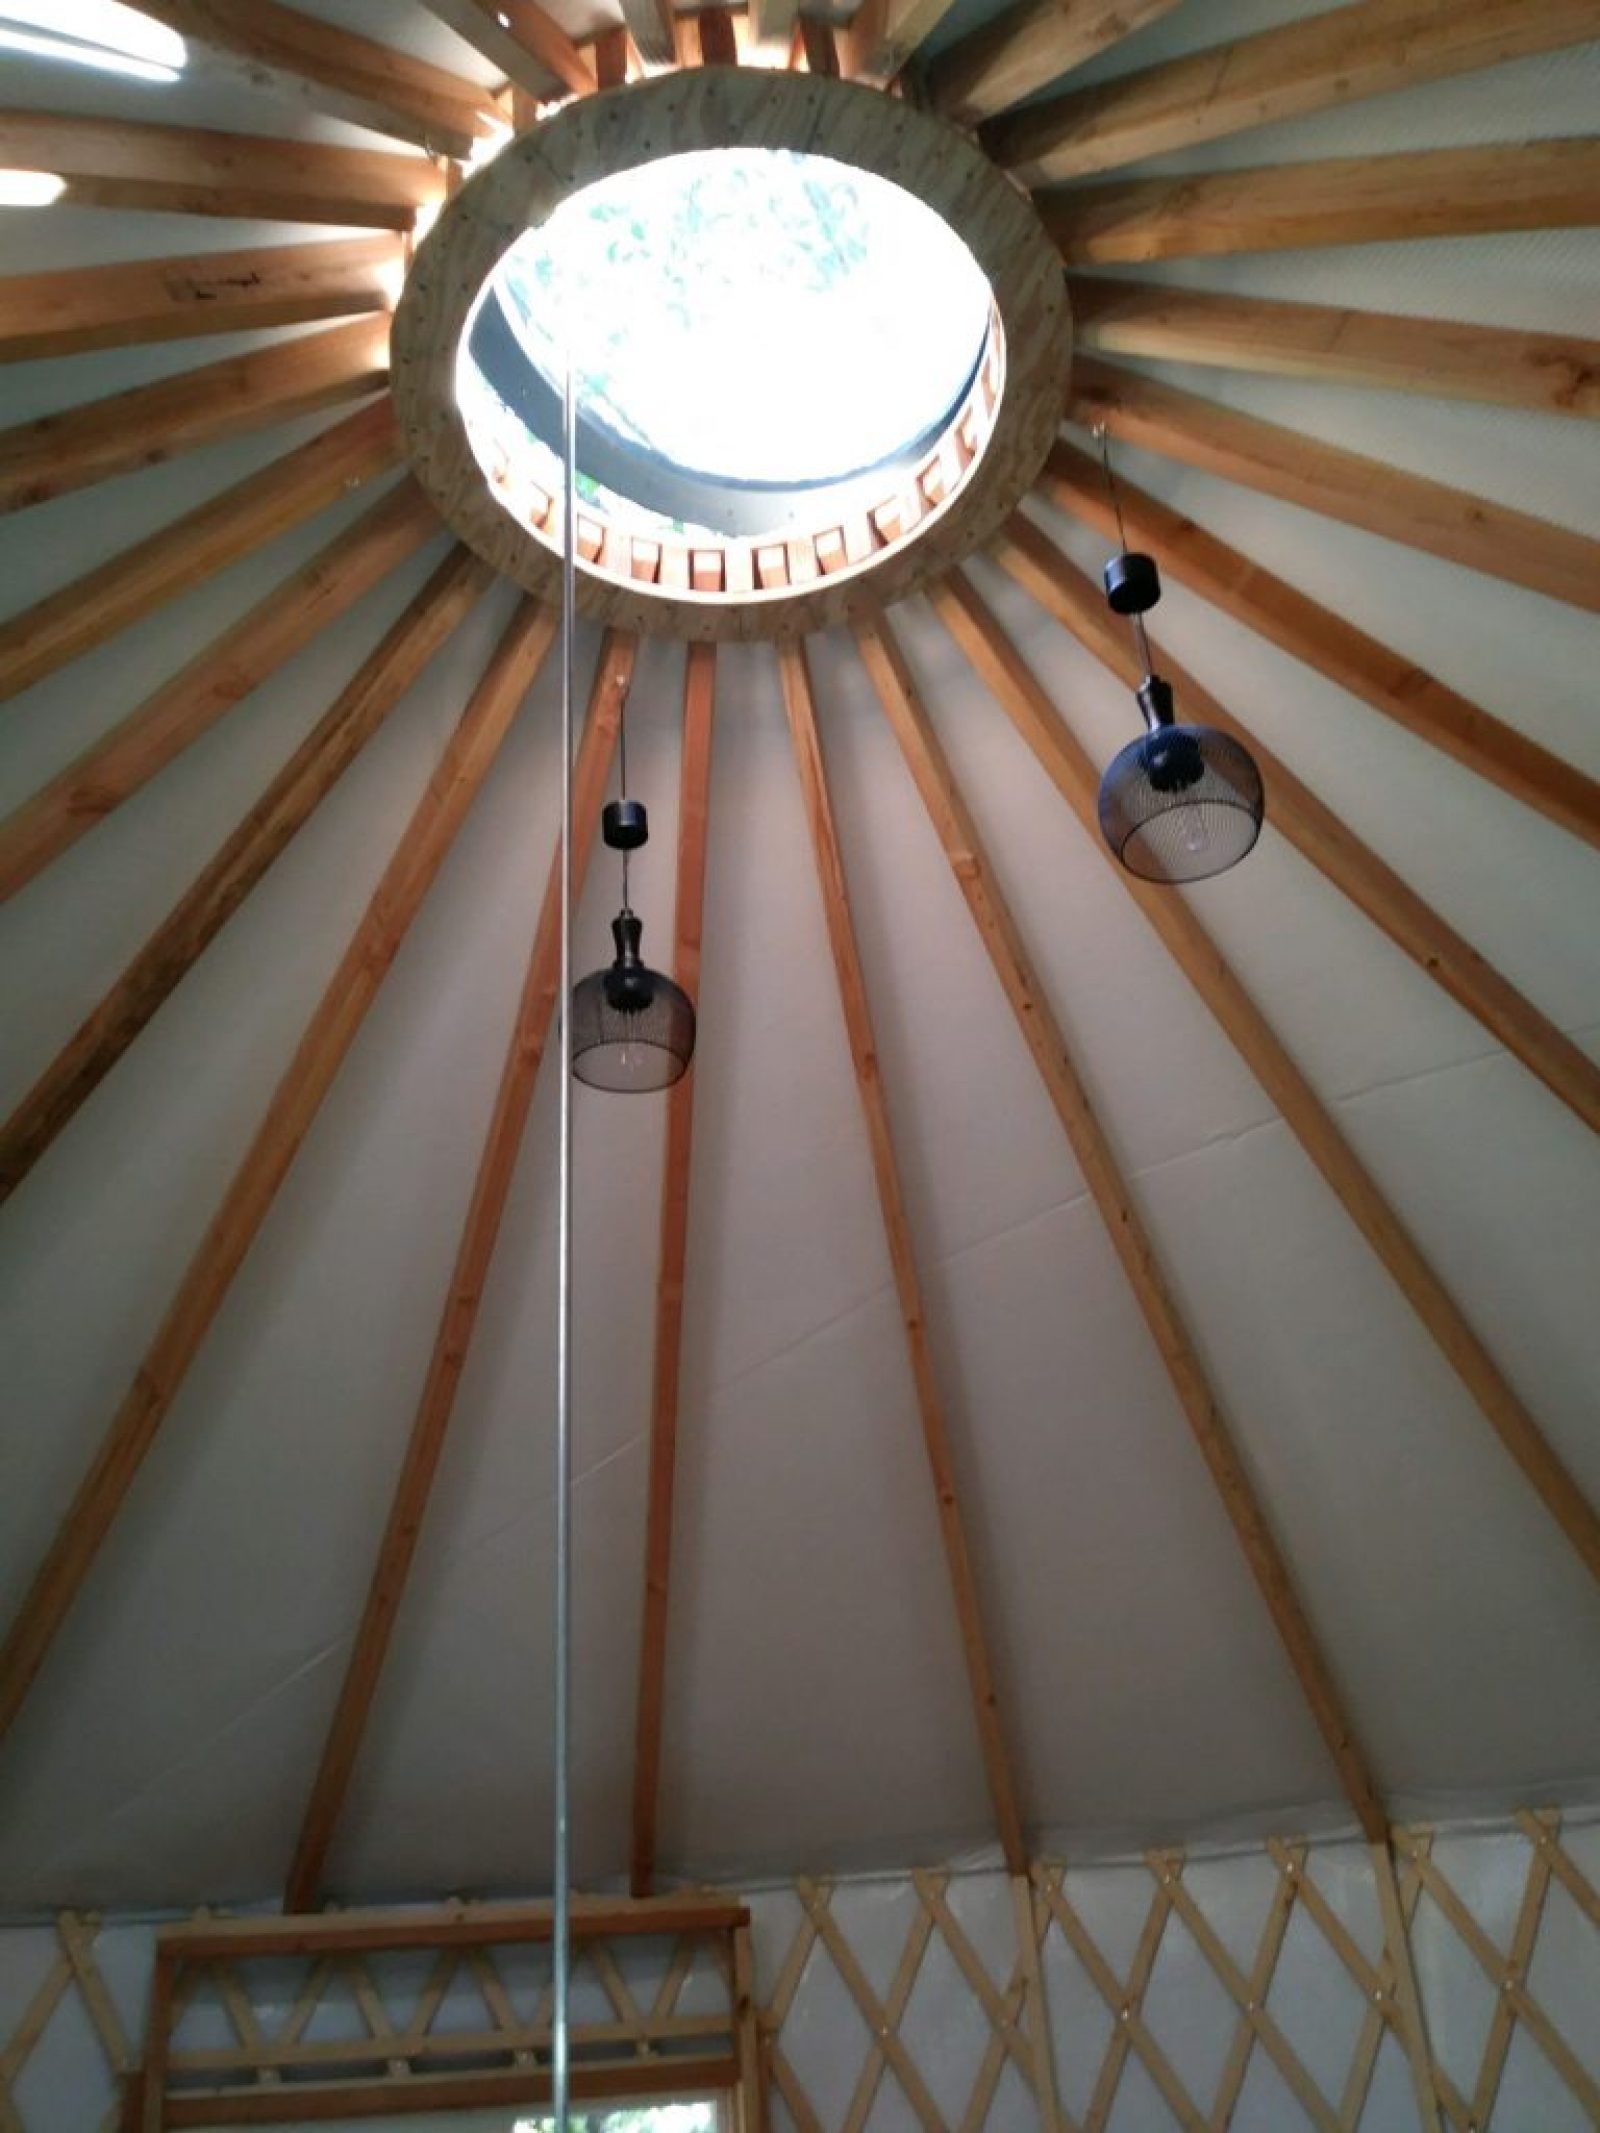 American Made Yurts